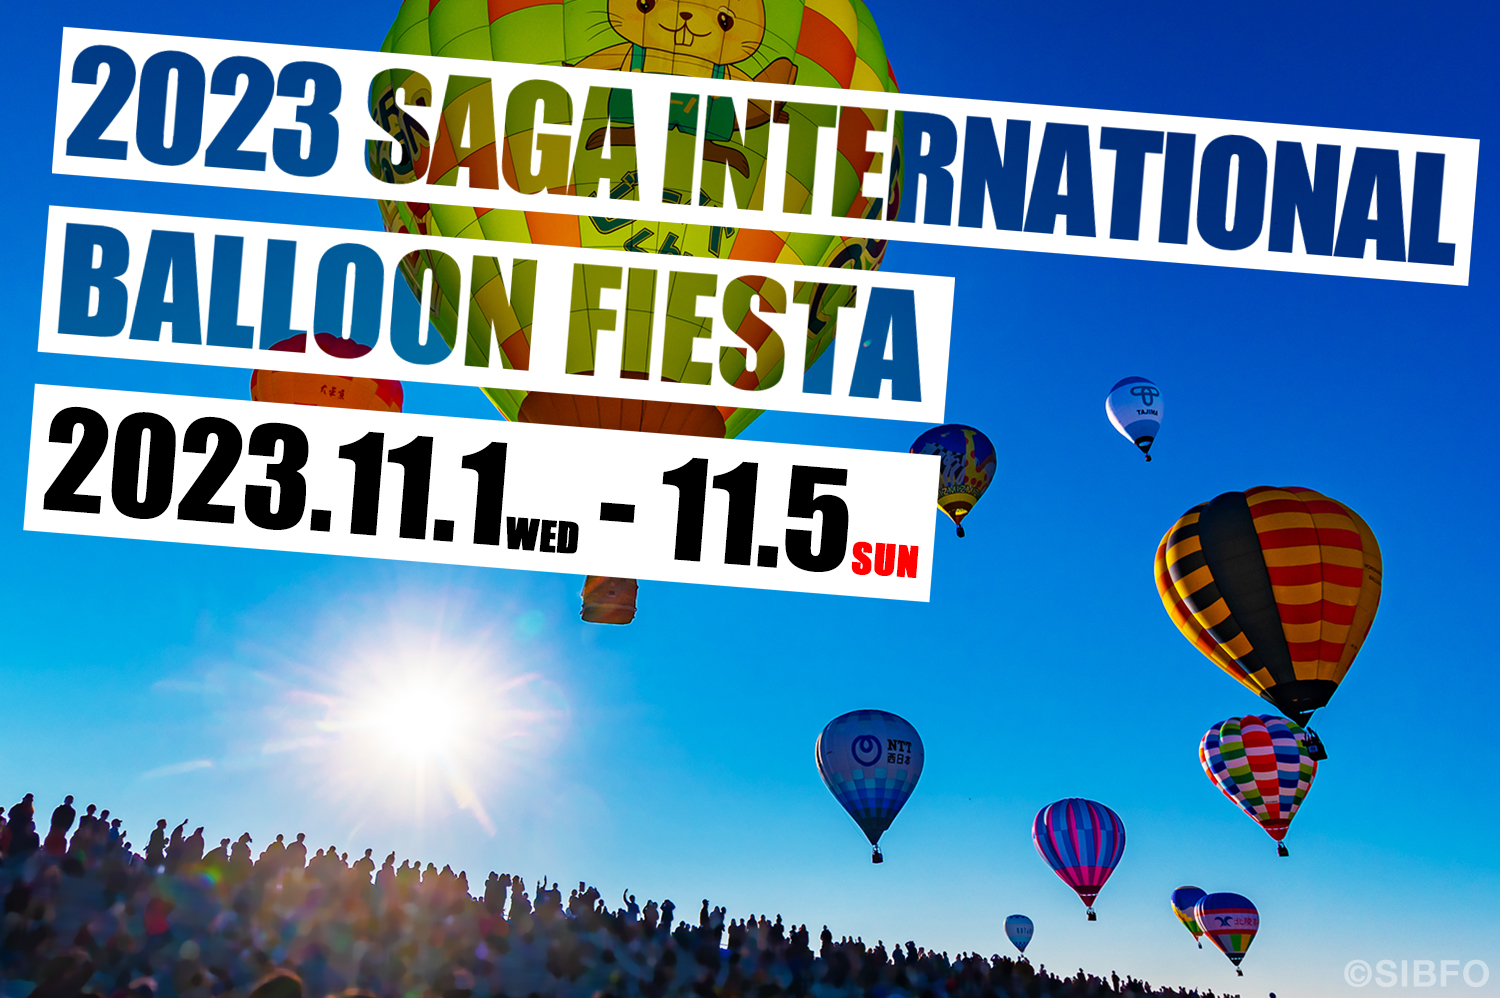 2023 Saga International Balloon Fiesta